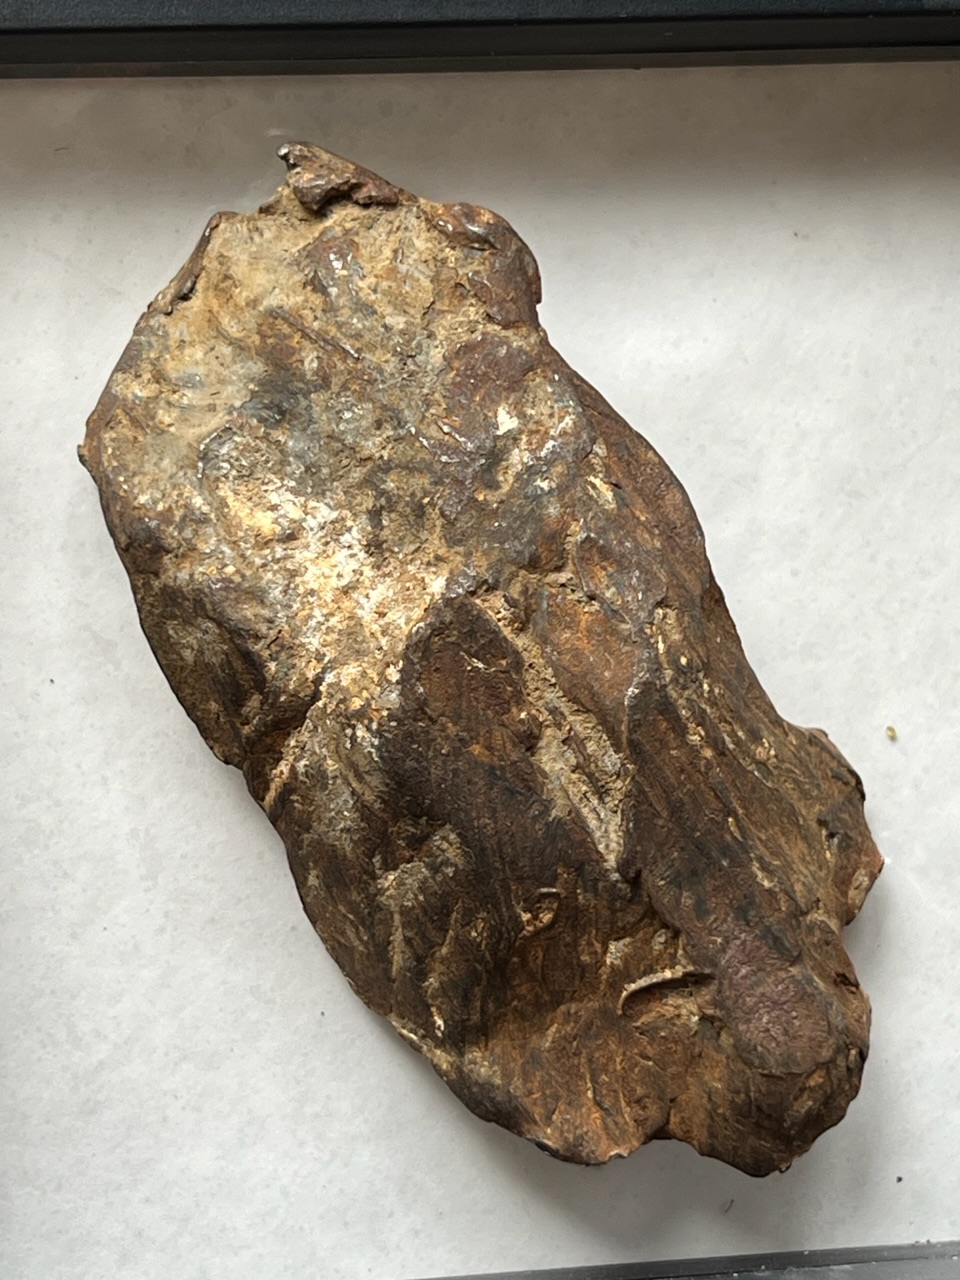 788g ゲベルカミル隕石 Gebel kamil meteorite-